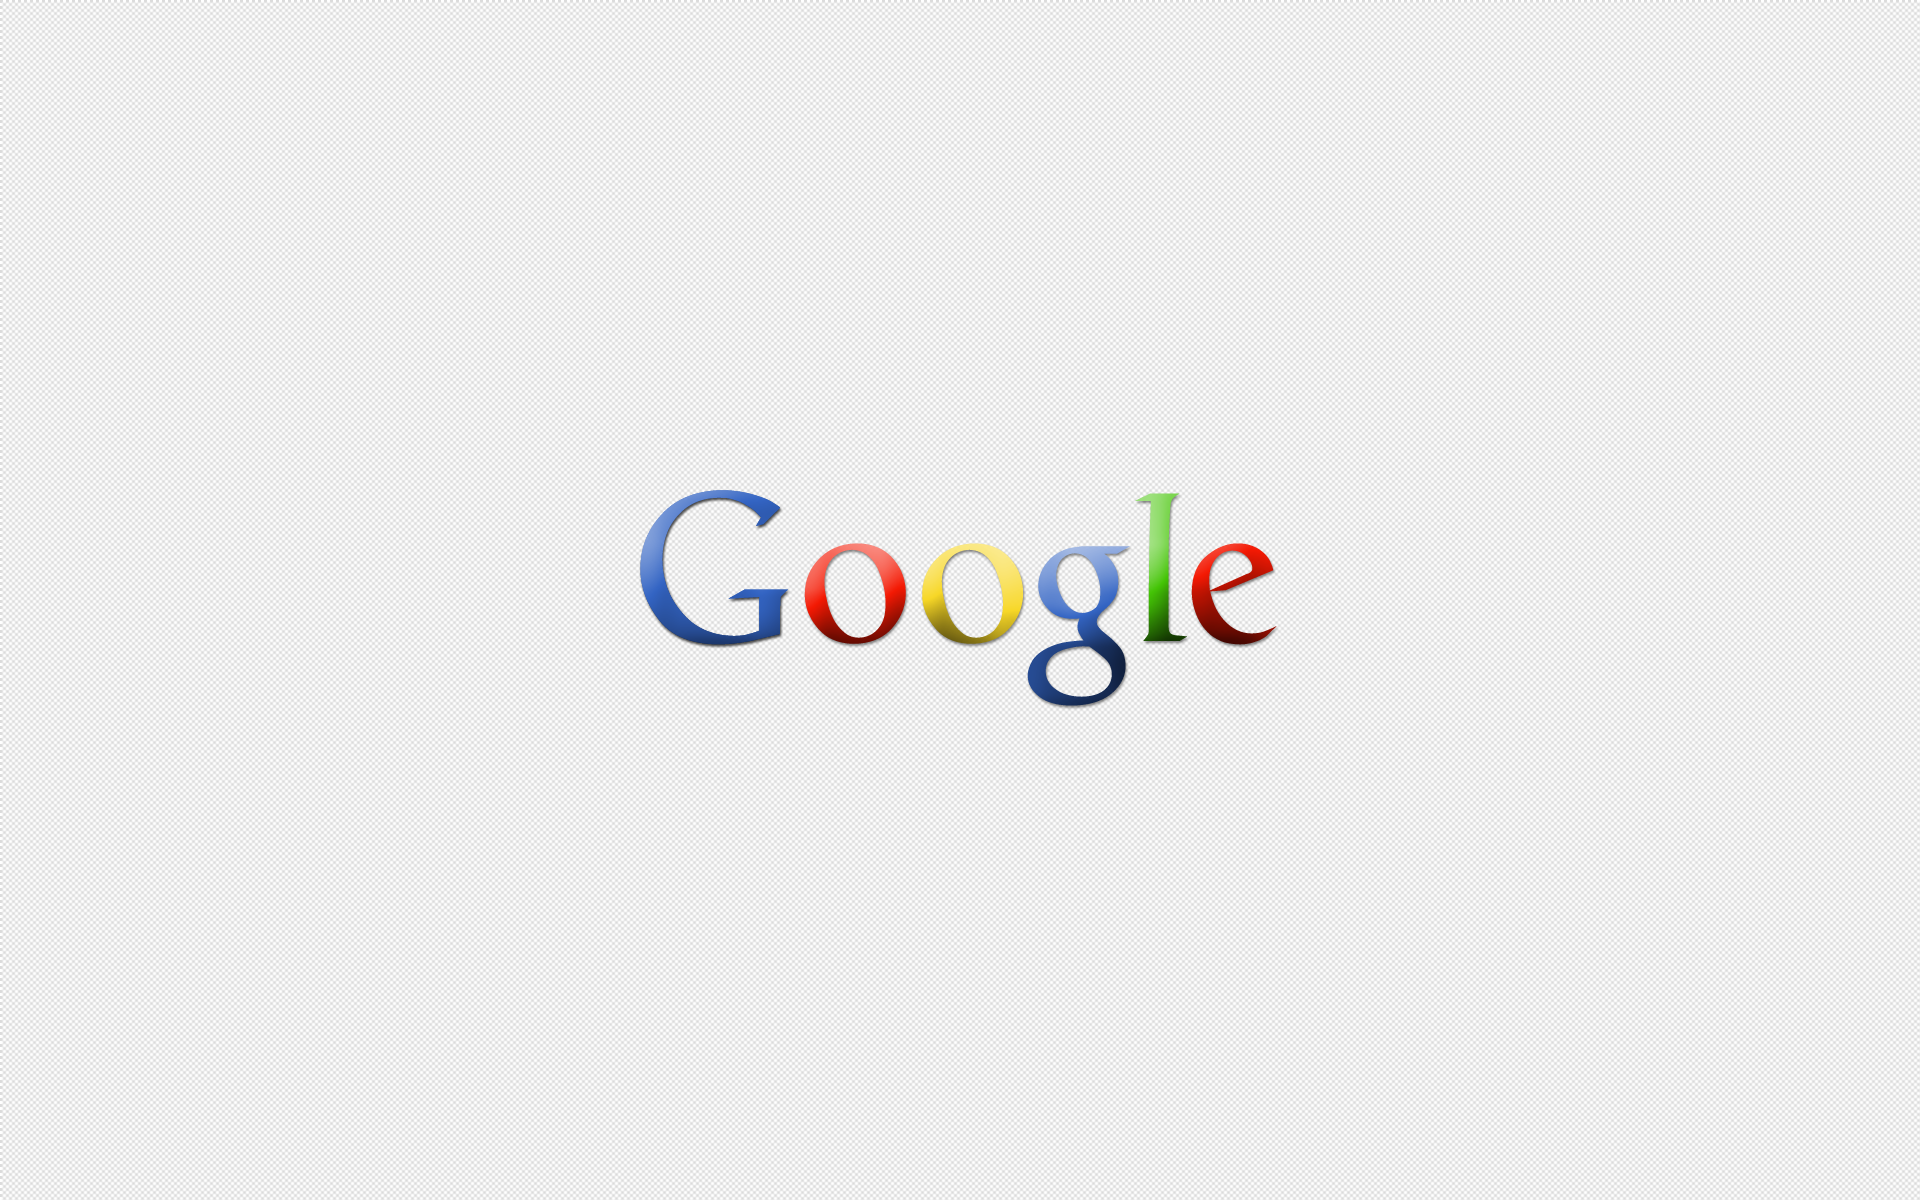 Google Wallpaper Backgrounds